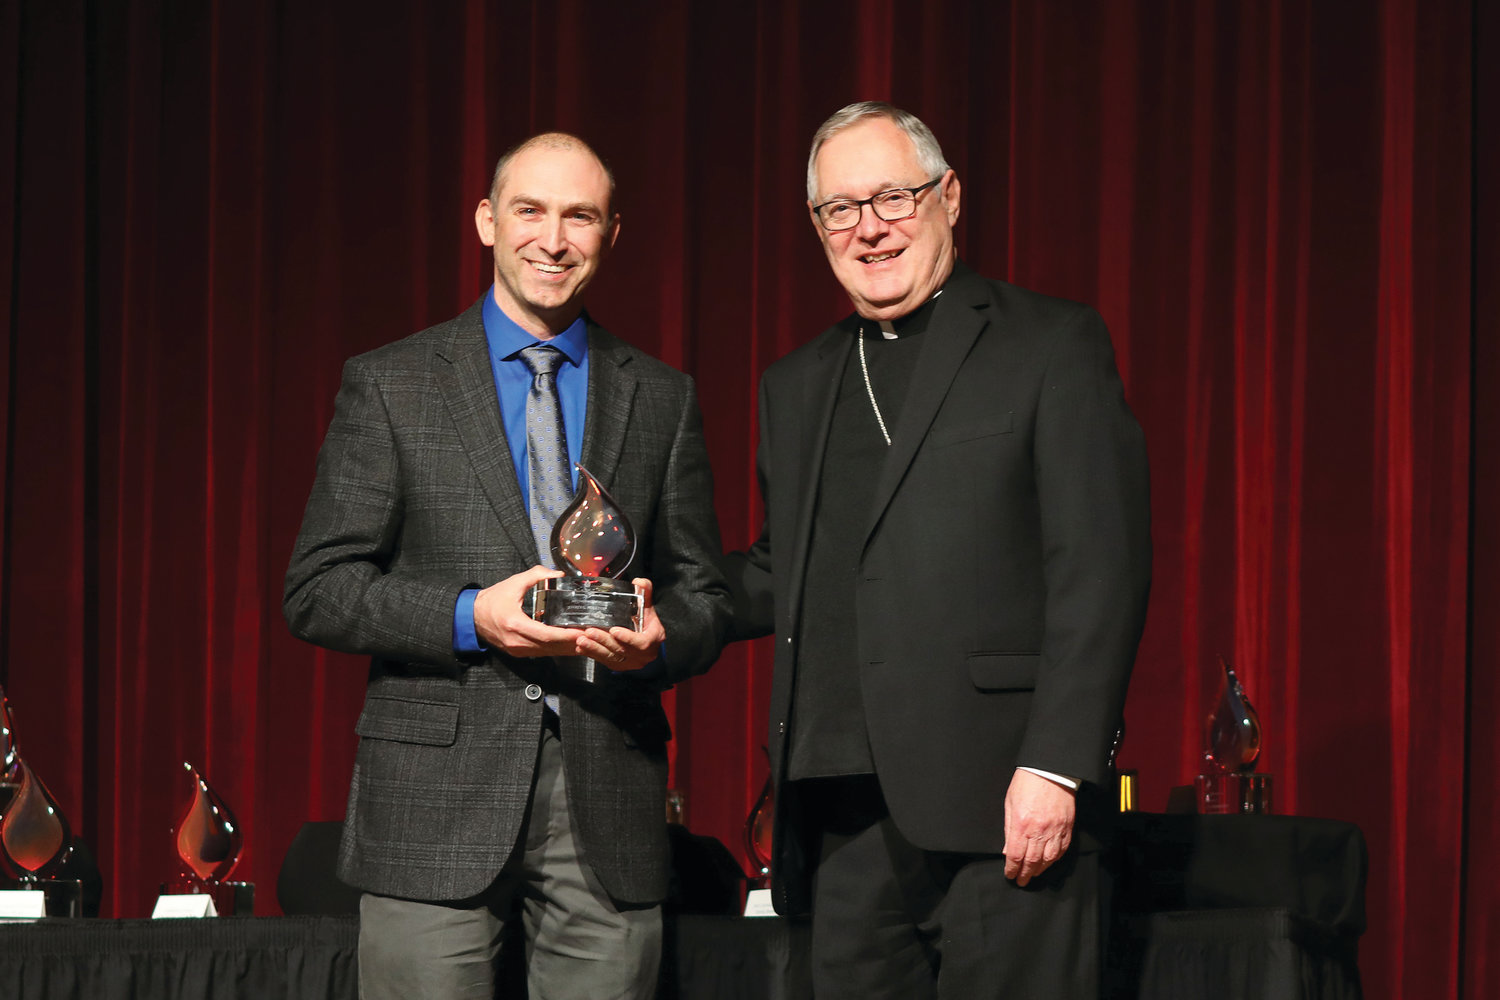 Jeffrey Pelletier is presented with an award in Parish Service.